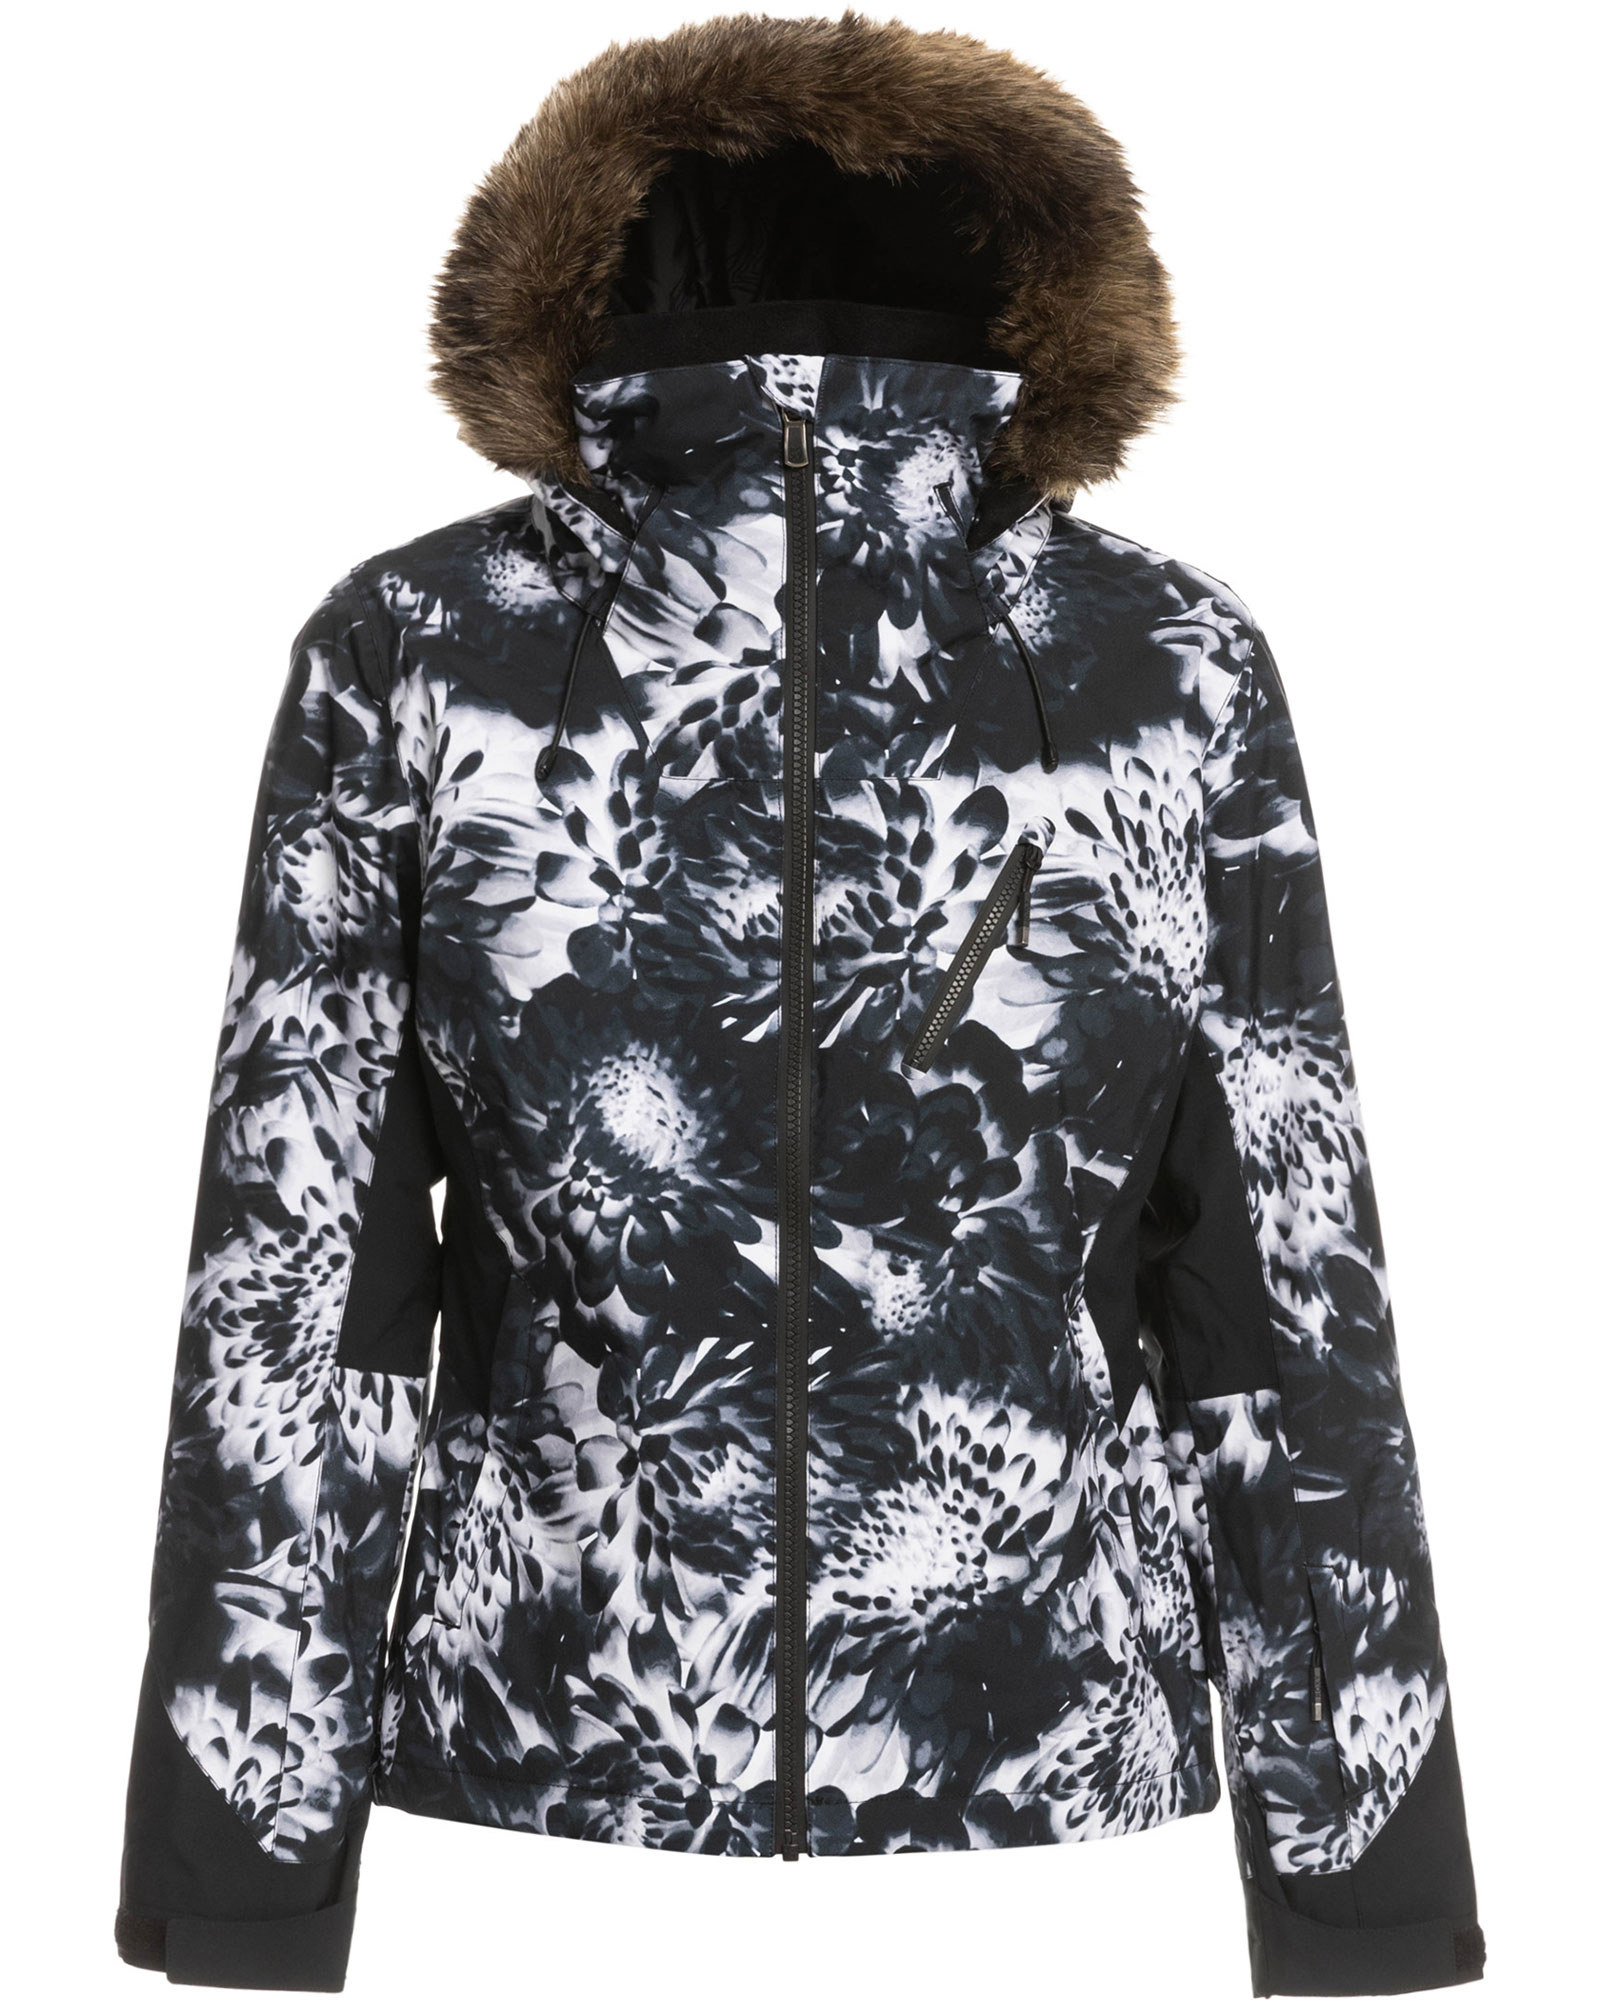 Product image of Roxy Jet Ski Premium Women's Jacket